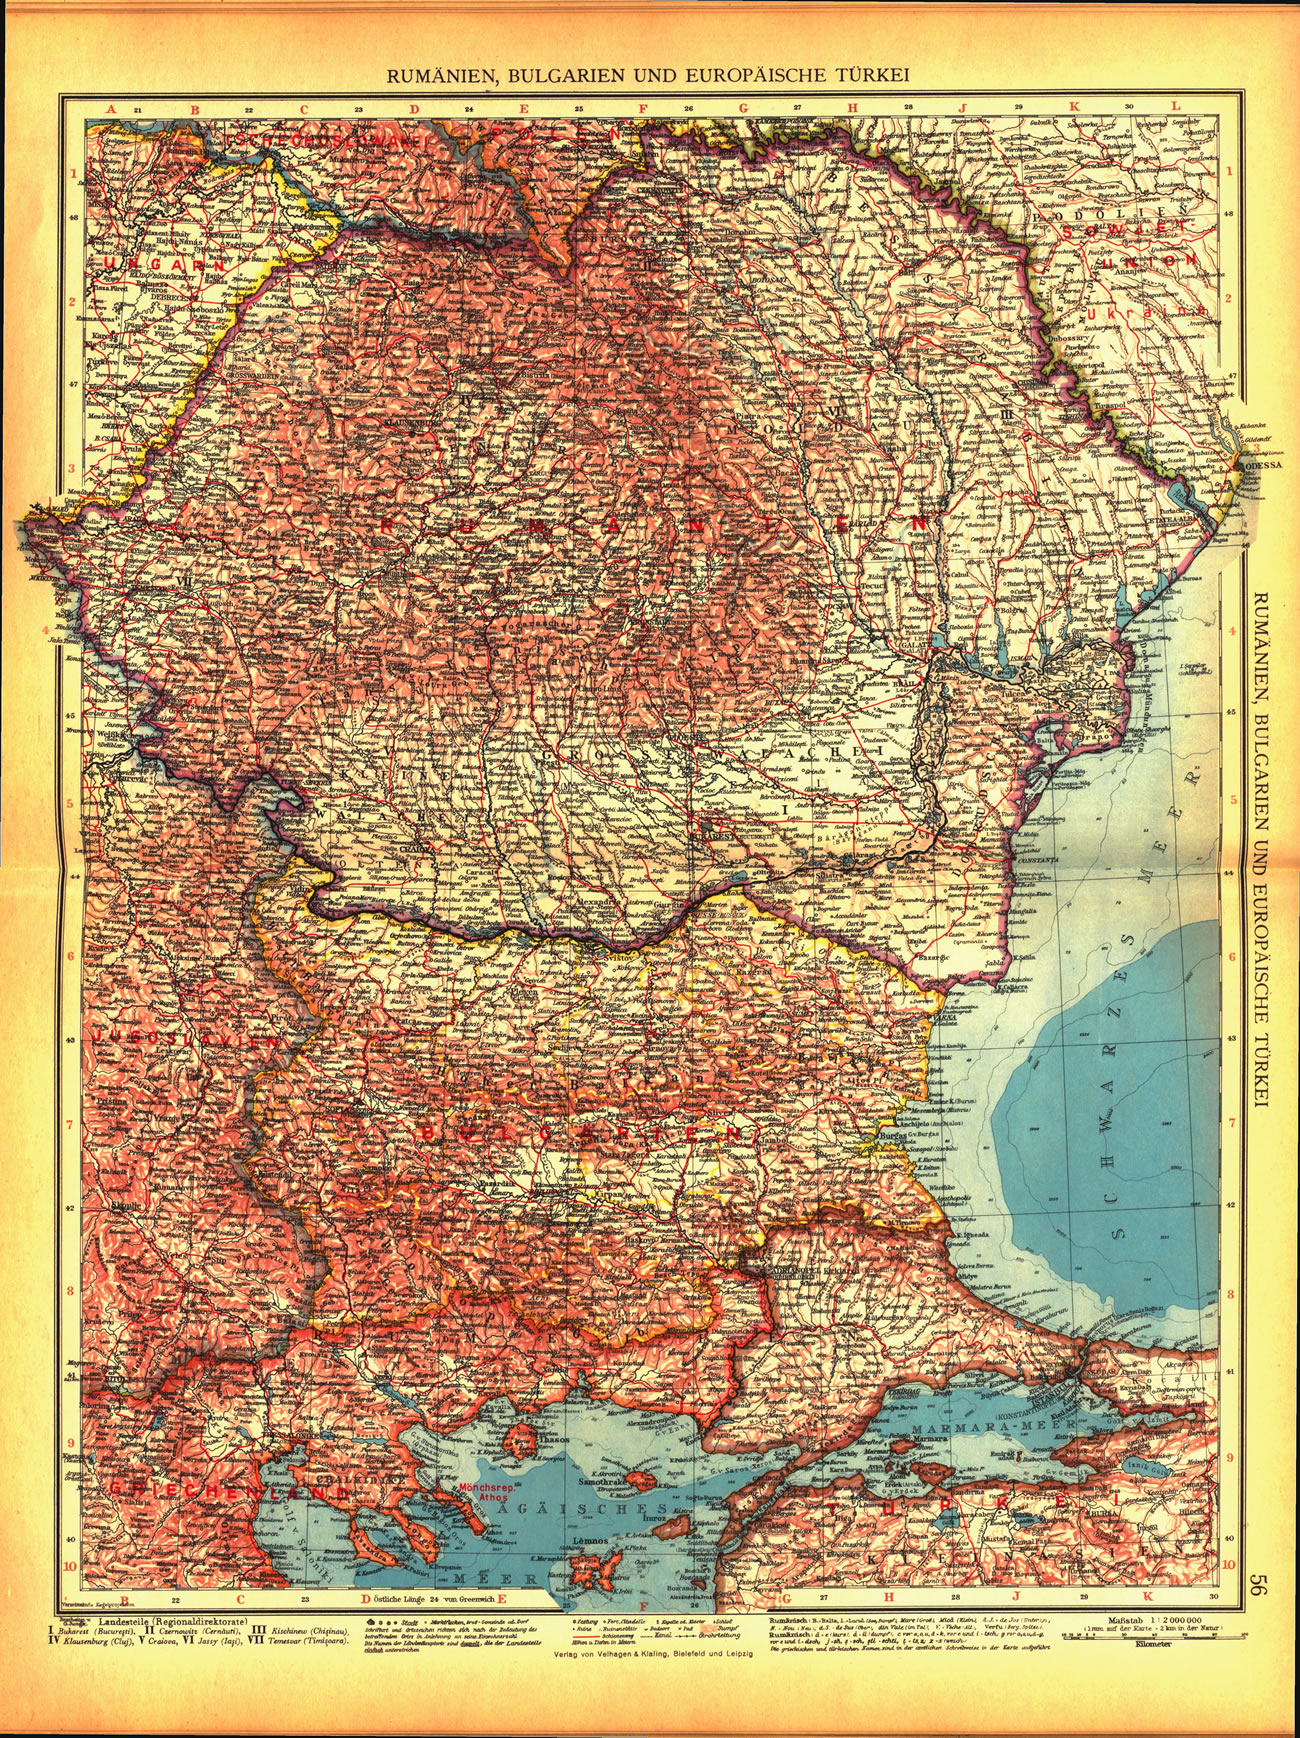 Map published in "Andrees Handatlas". Leipzig, 1937 (MNIR)